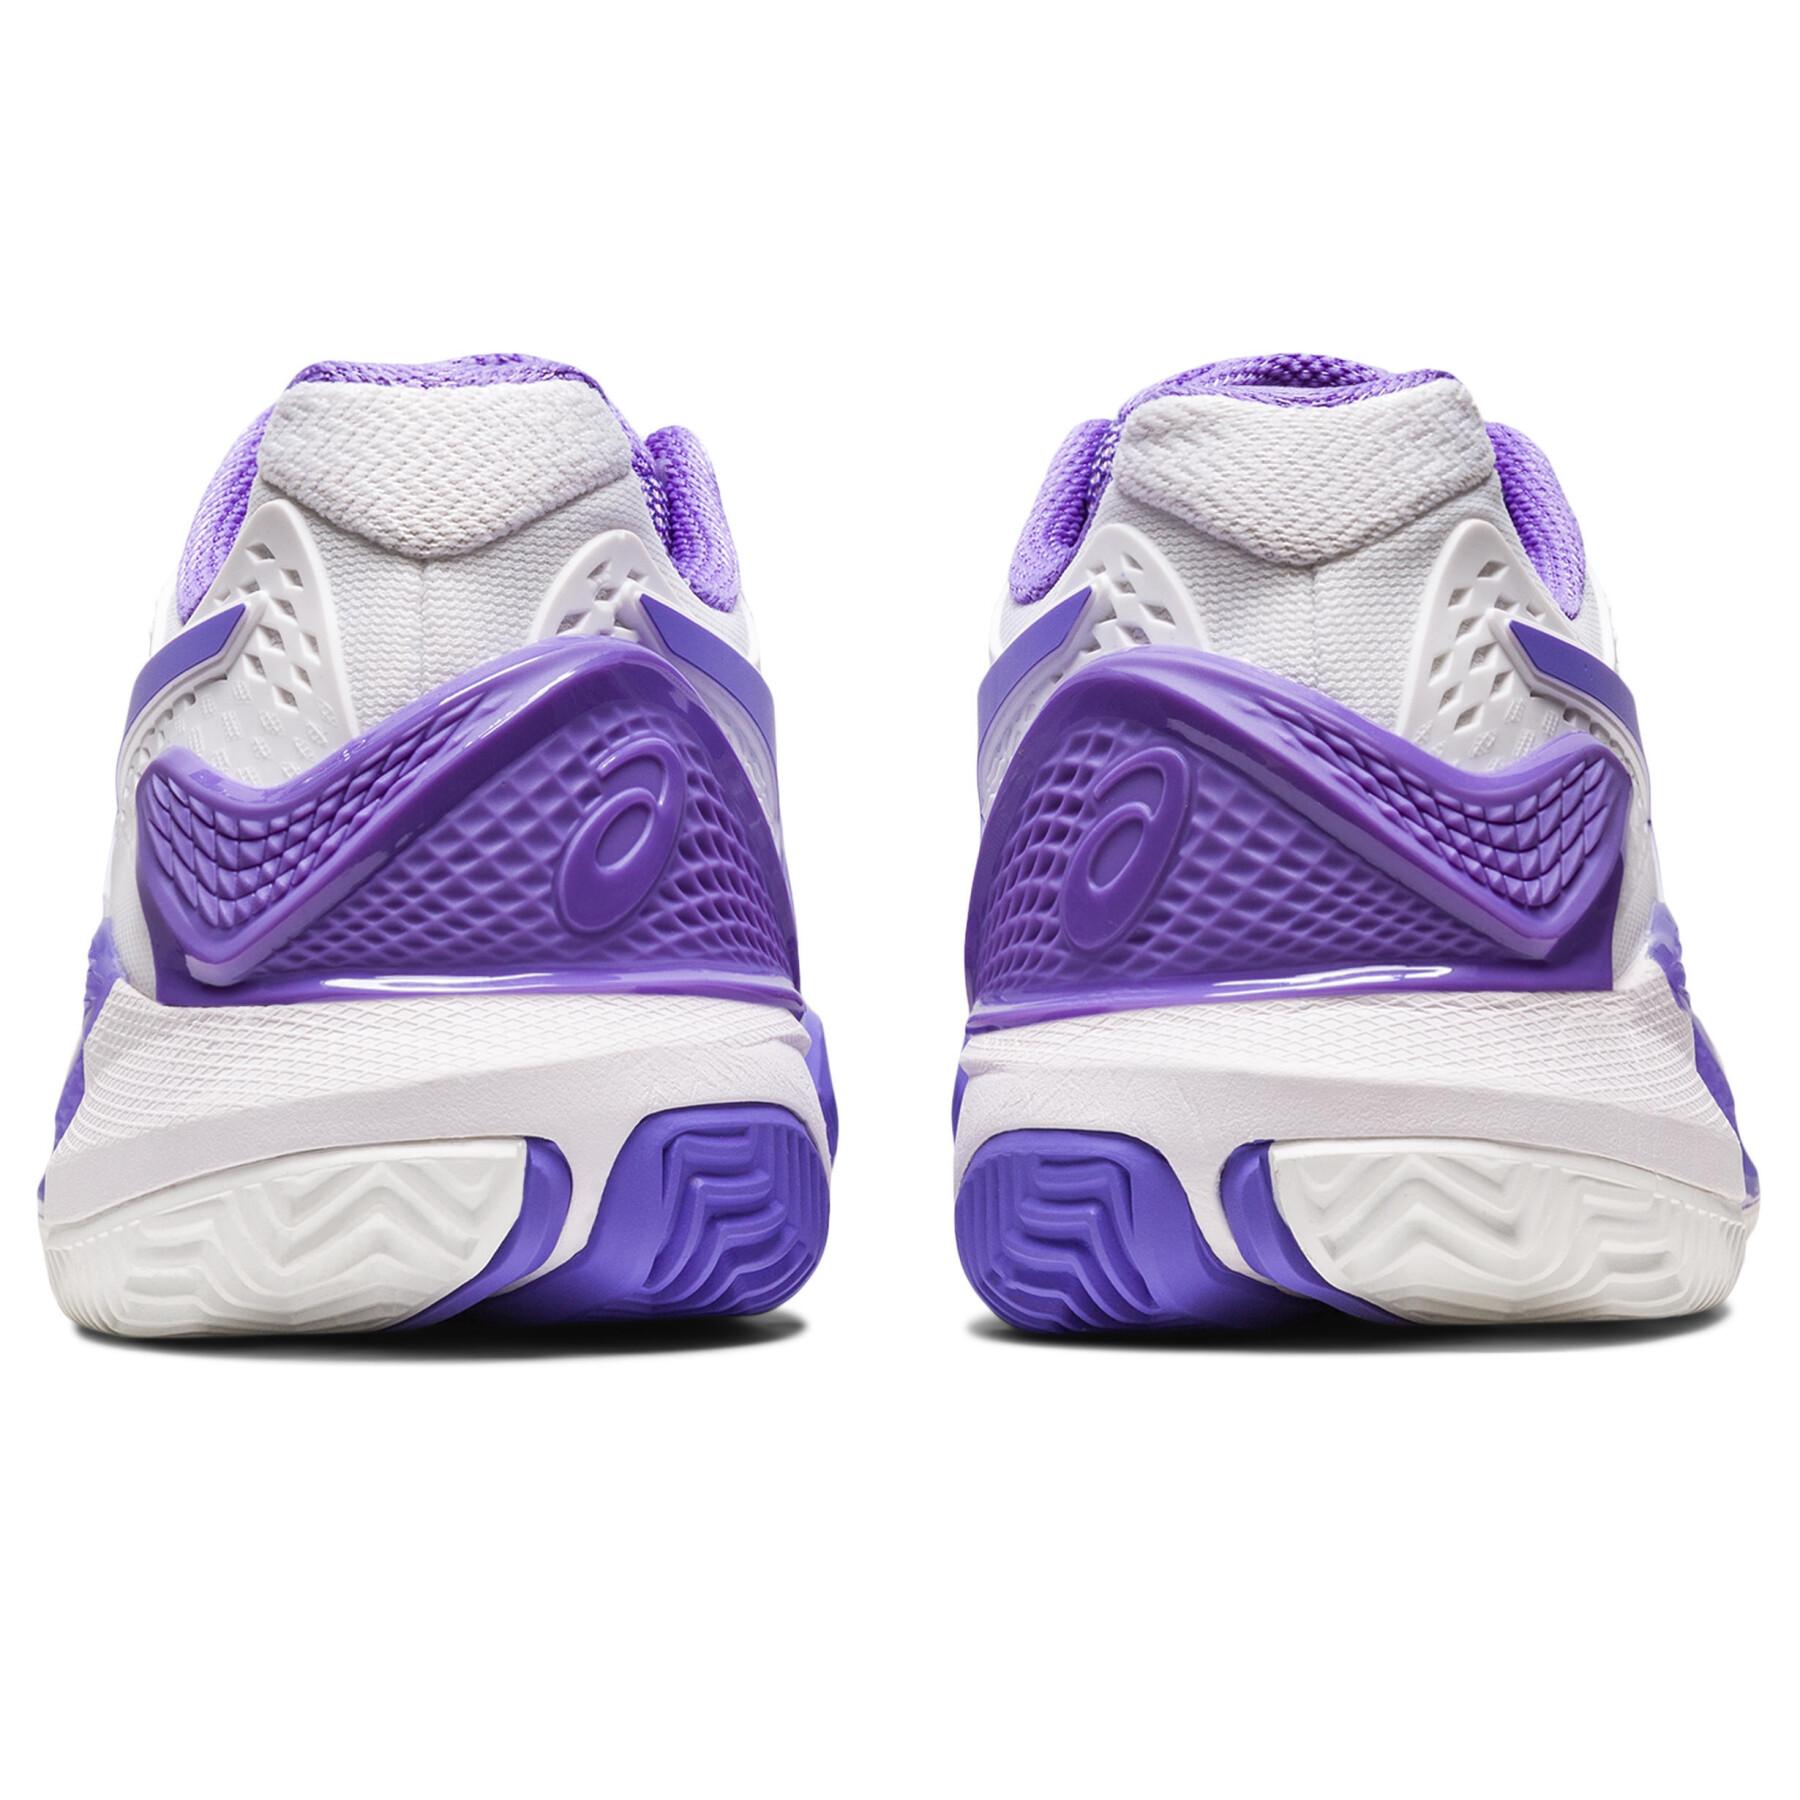 Sapatos de ténis femininos Asics Gel-Resolution 9 Clay